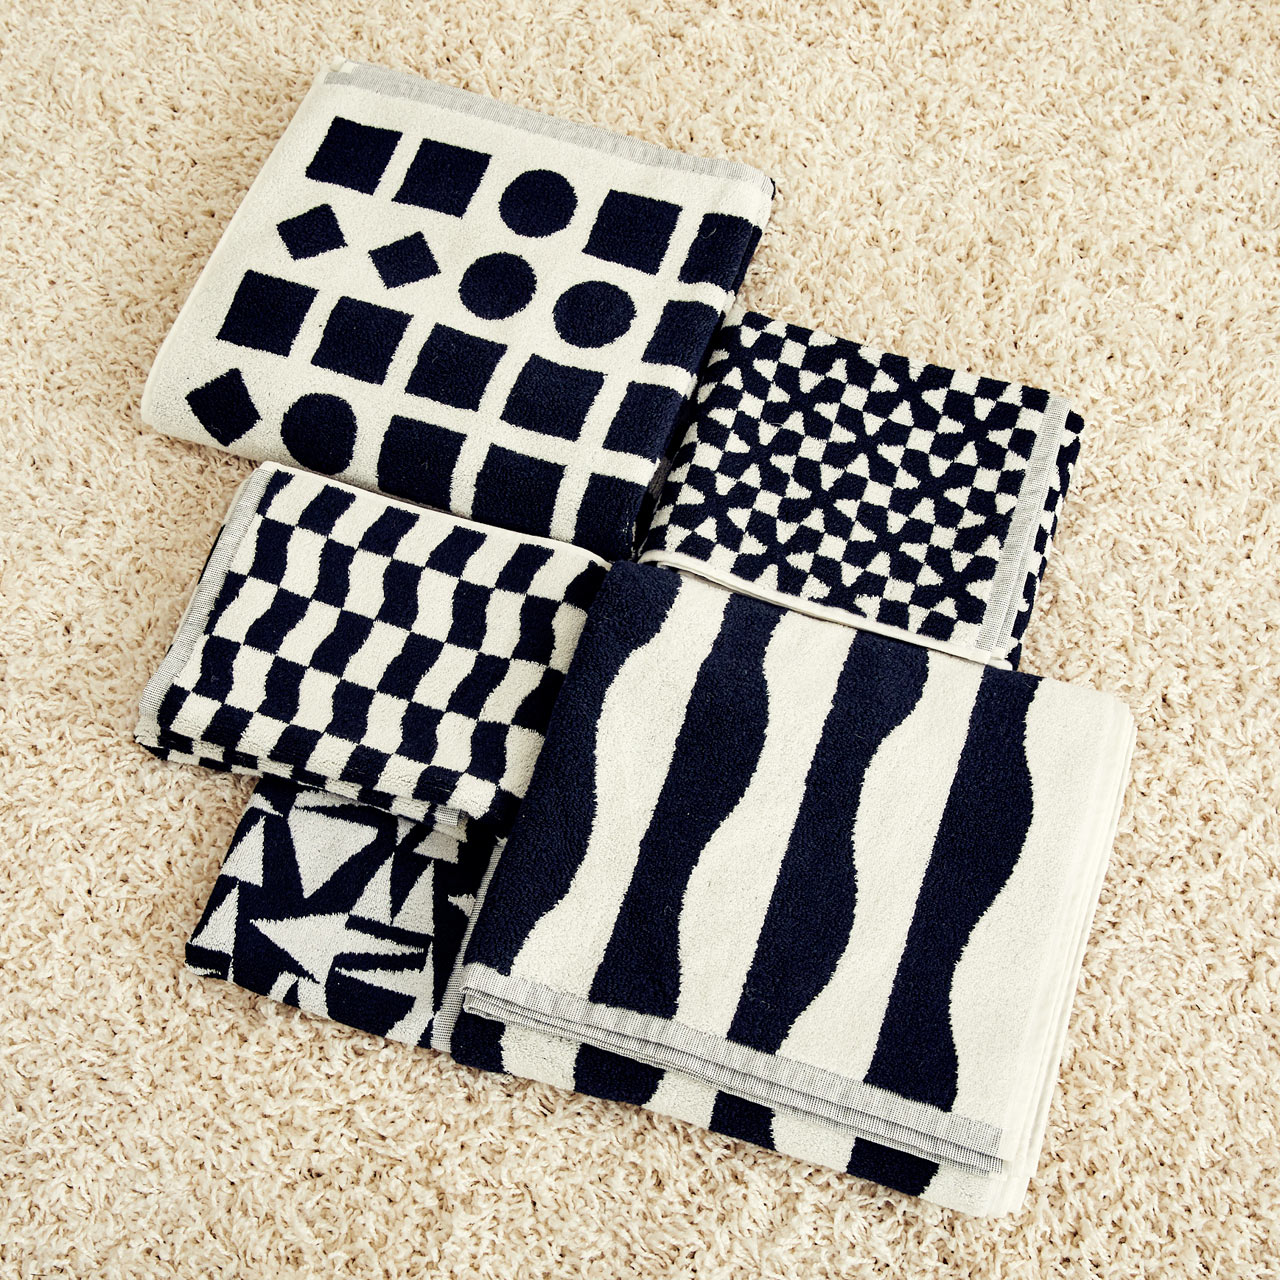 https://design-milk.com/images/2020/04/DusenDusen-2020-10-year-BW-towels-1.jpg